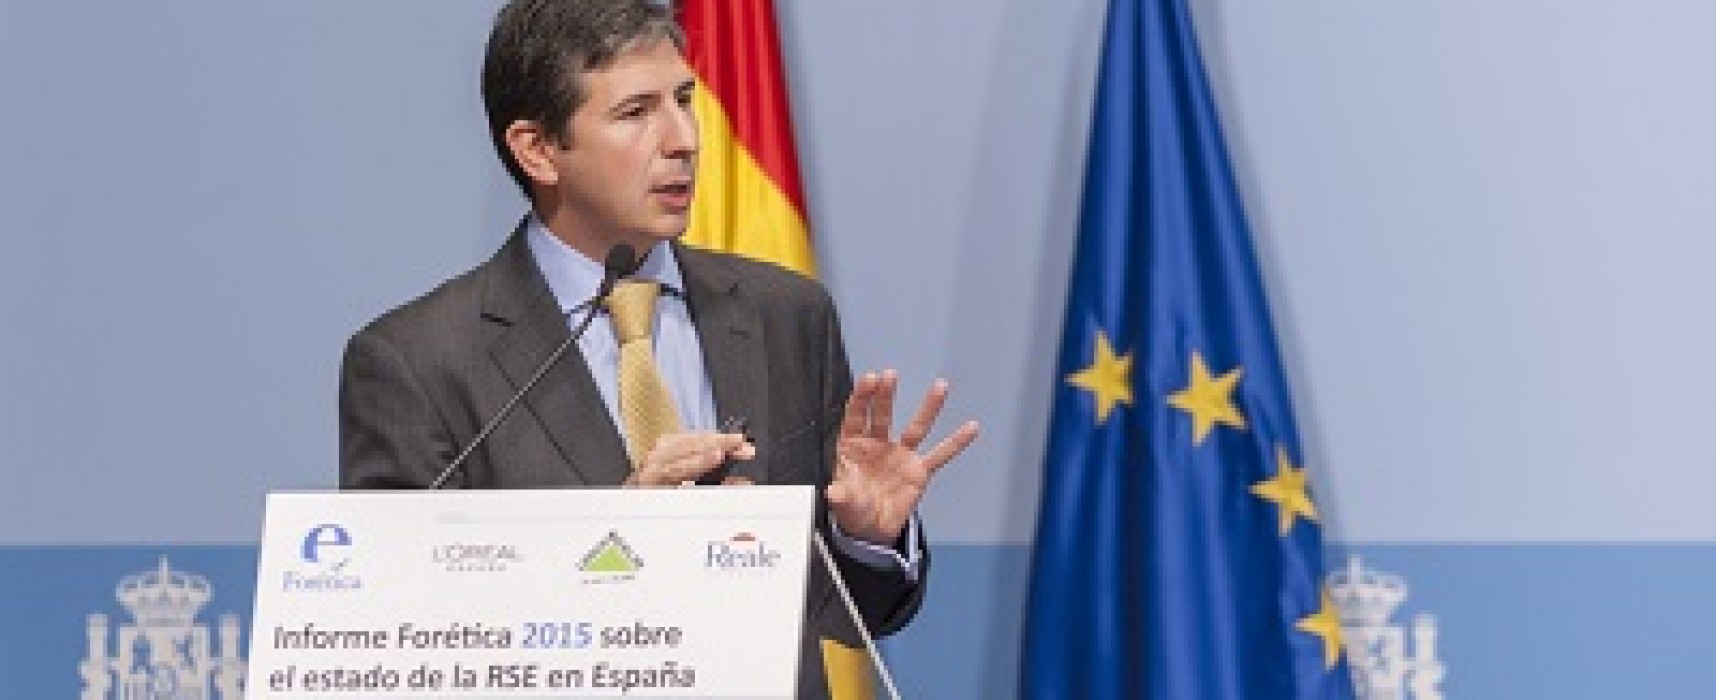 12 millones de consumidores responsables en España según el Informe Forética 2015